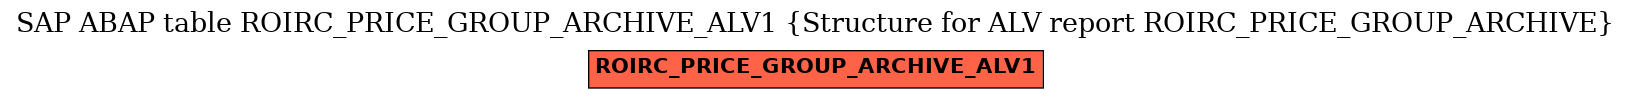 E-R Diagram for table ROIRC_PRICE_GROUP_ARCHIVE_ALV1 (Structure for ALV report ROIRC_PRICE_GROUP_ARCHIVE)